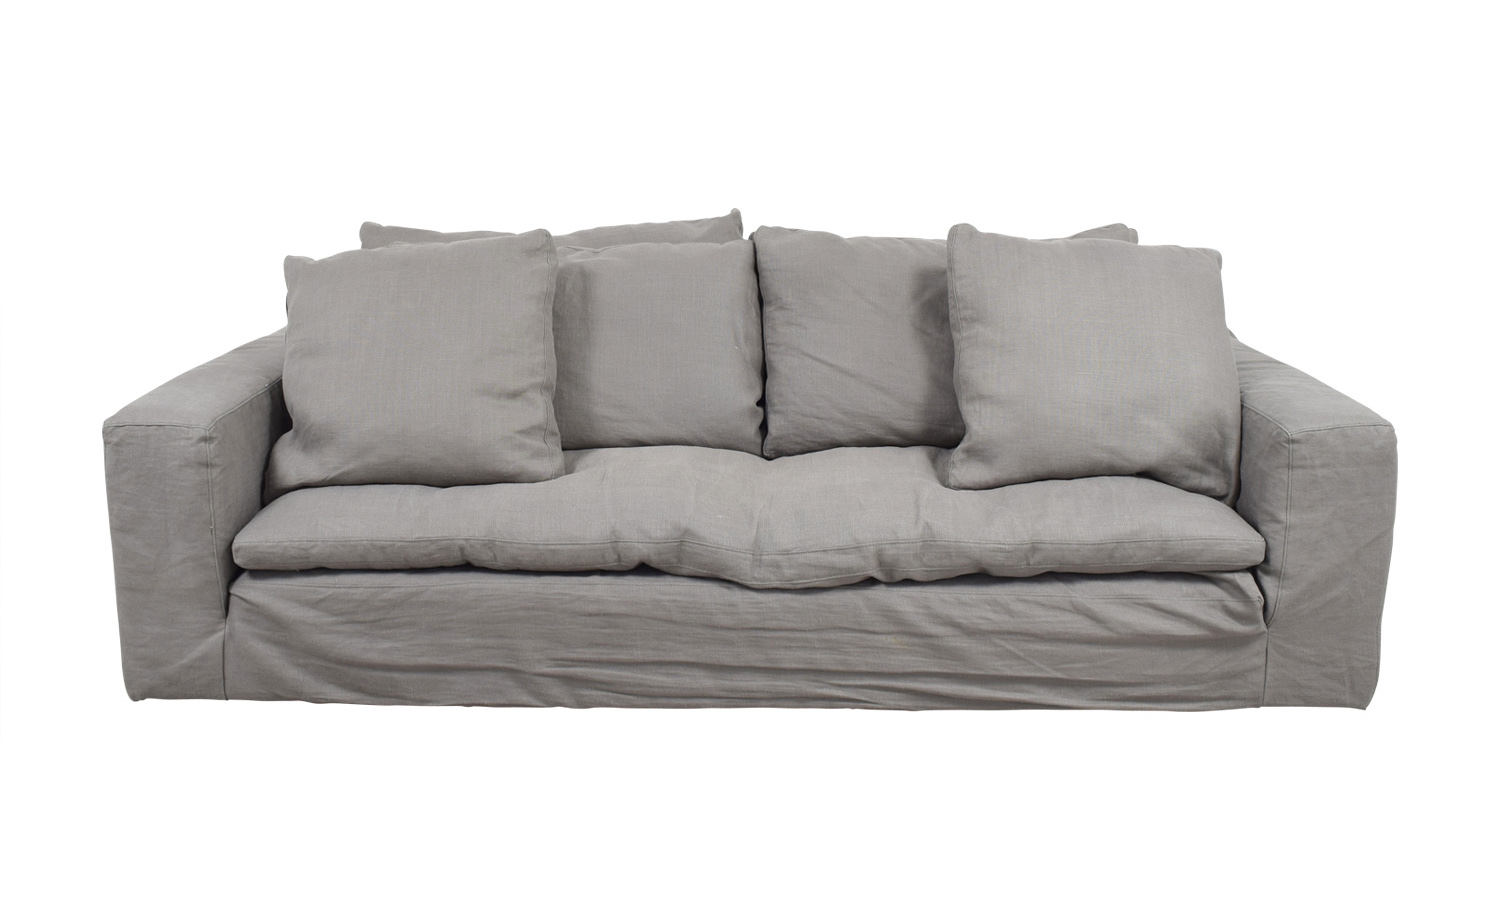 Truth about Restoration Hardware's Cloud Sofa — Jen Talbot Design